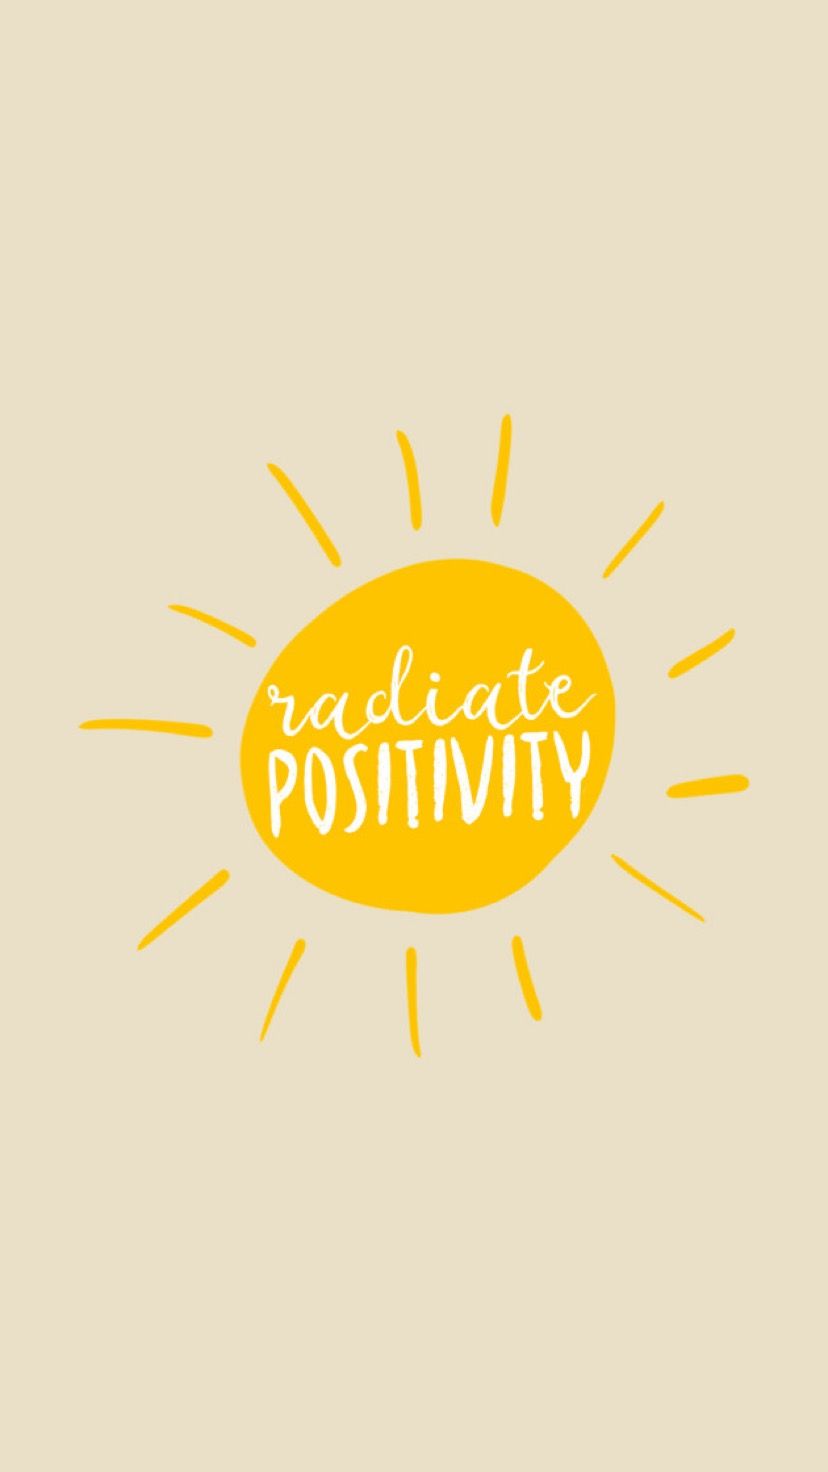 A yellow sun with the word radiate positivity - Positivity